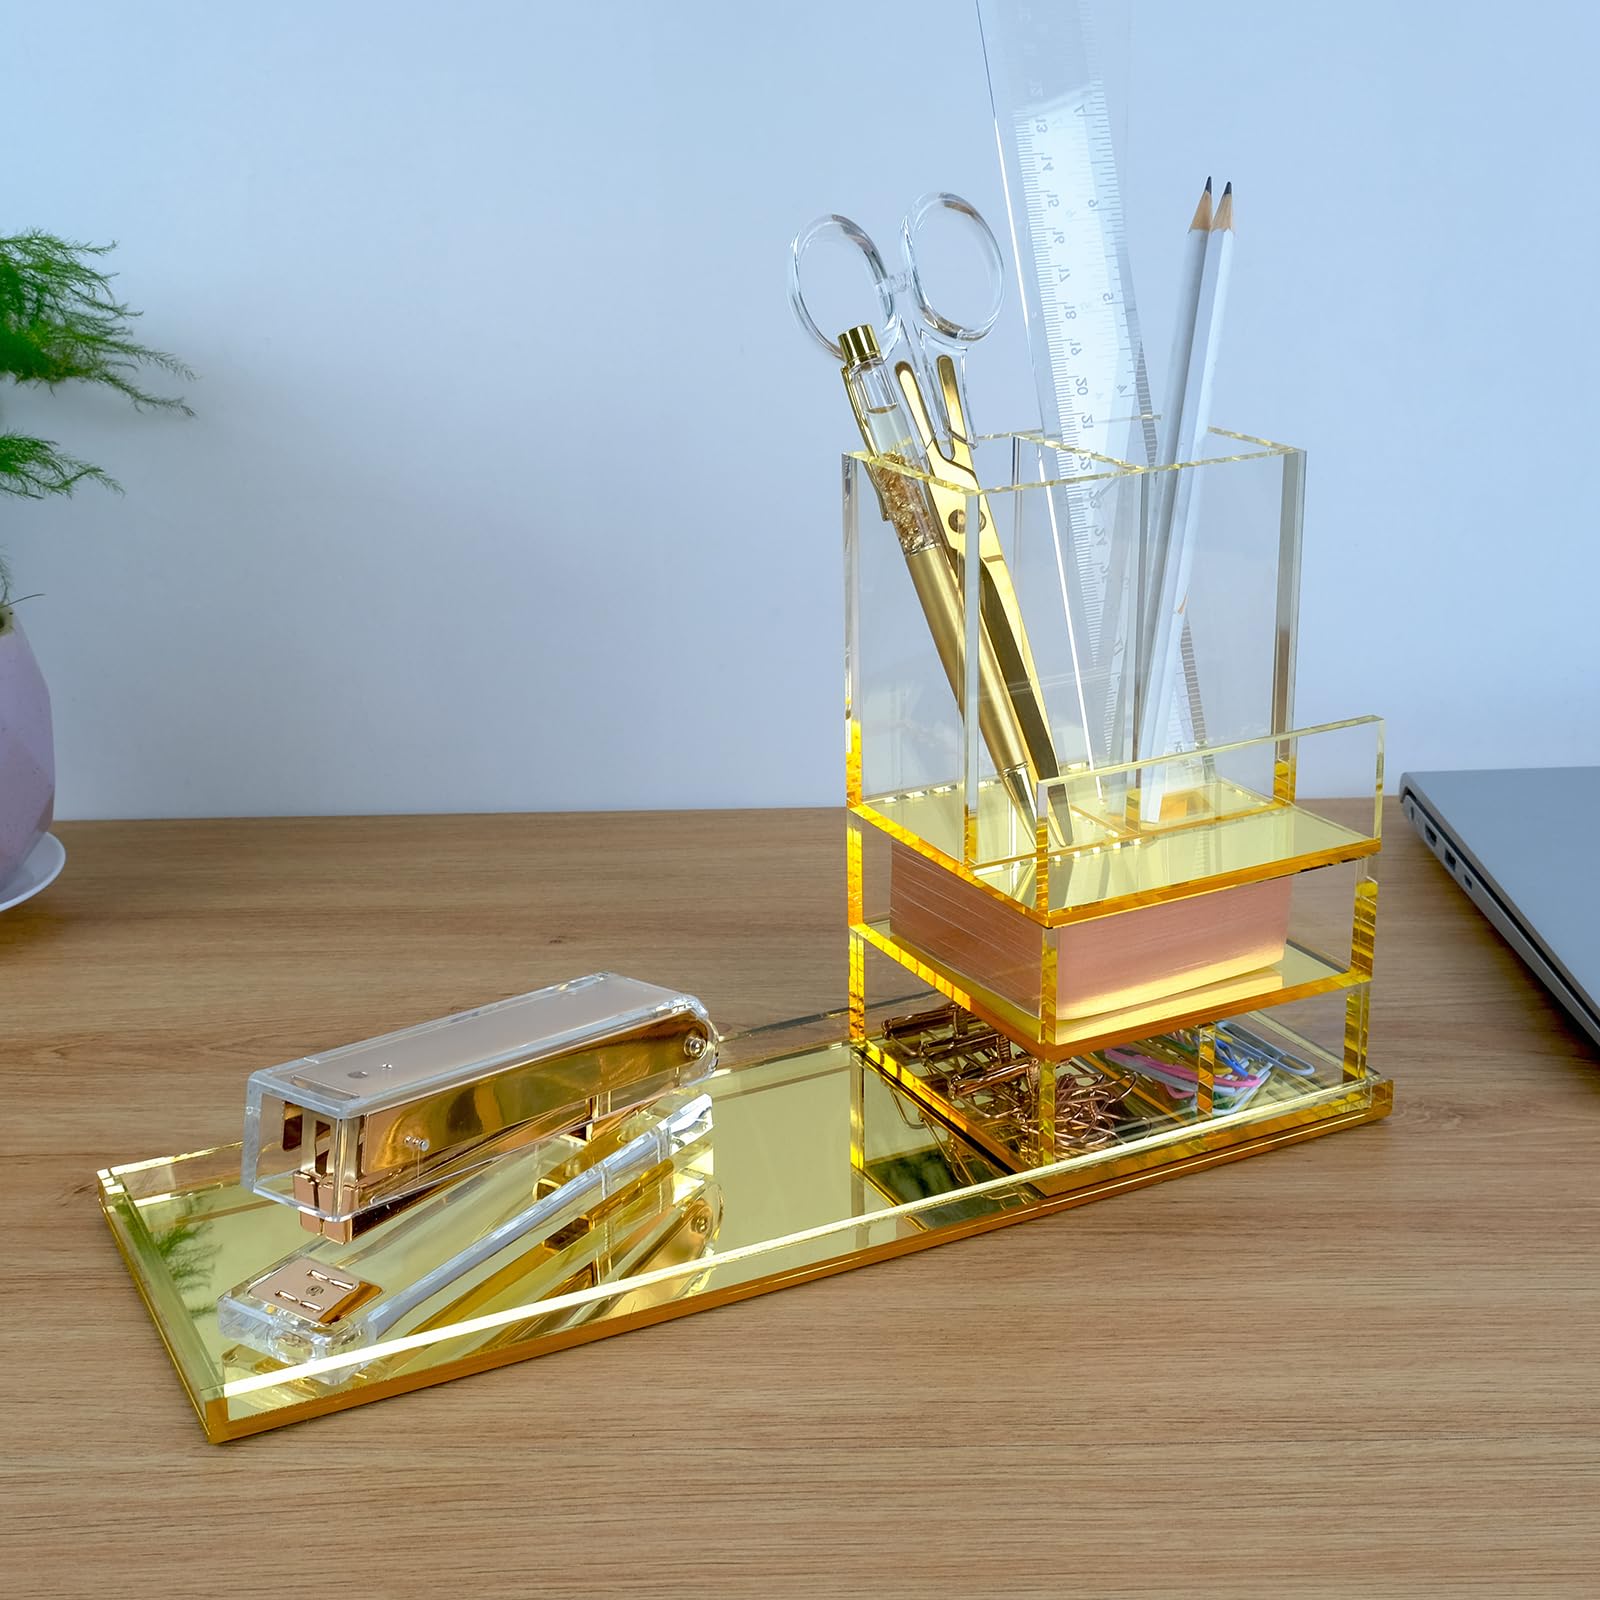 EXPUTRAN Acrylic Desk Organizer 4-Piece Desk Kit + Free Complimentary Acrylic Ruler, Desktop Organization for Office or Home (Gold)